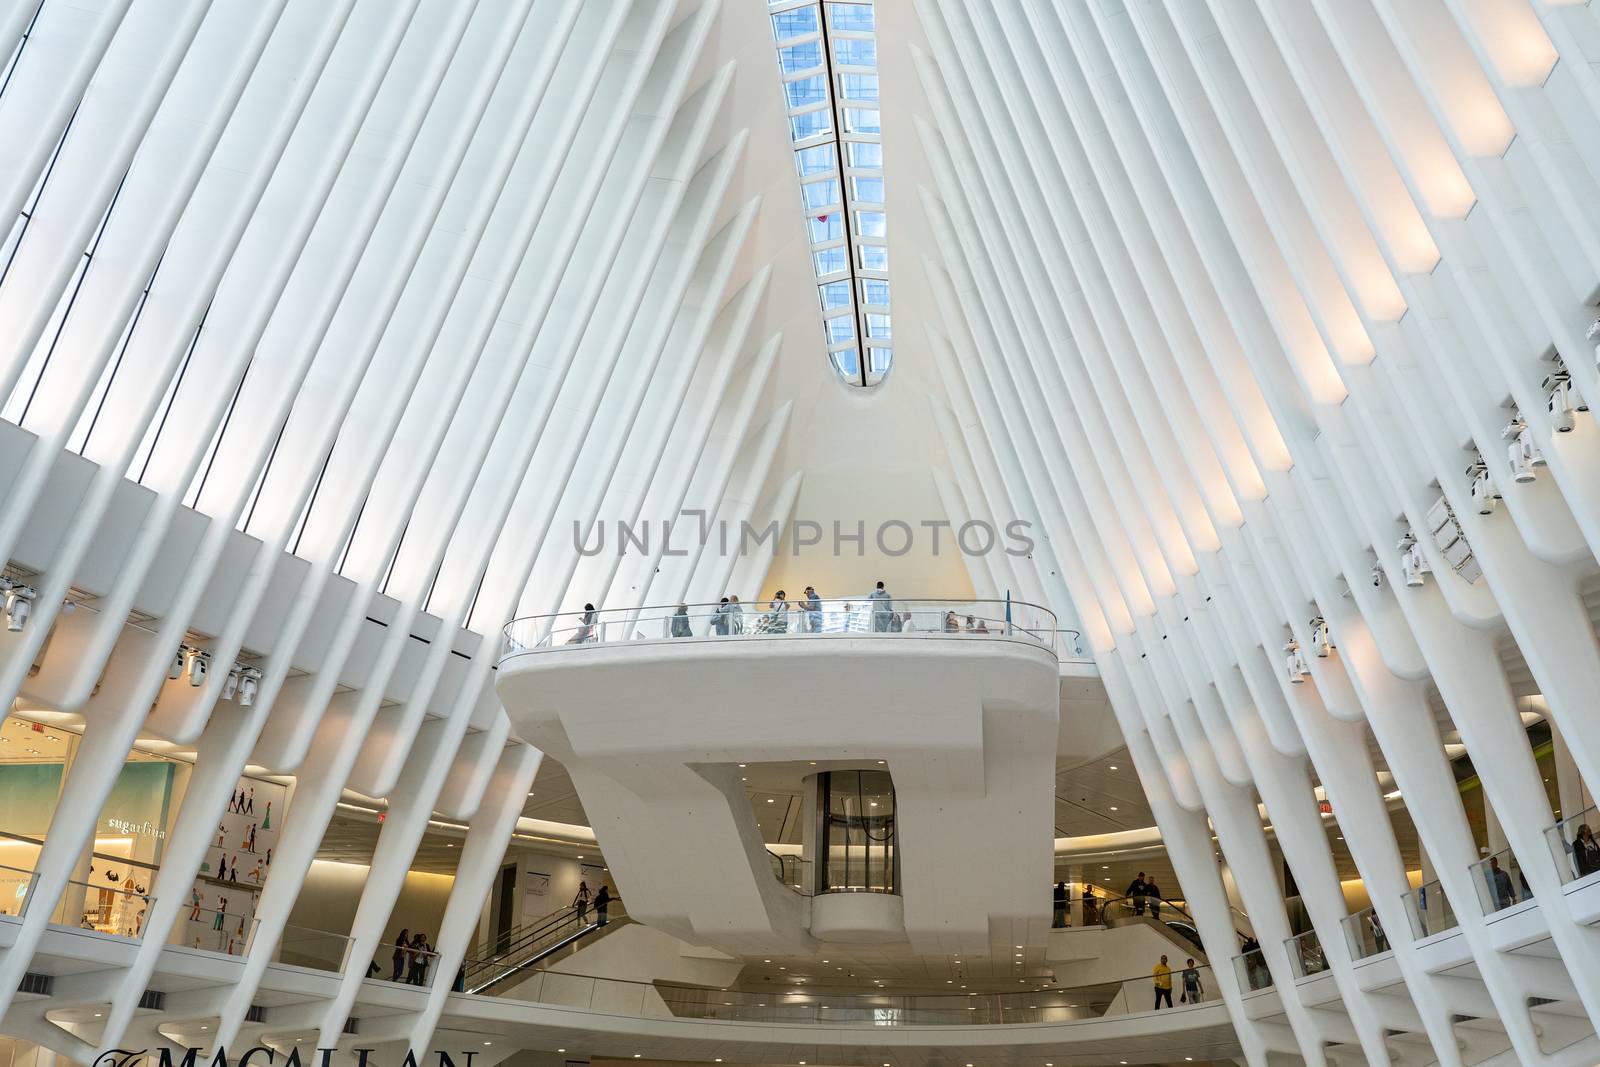 World Trade Center Station in New York City, USA by oliverfoerstner